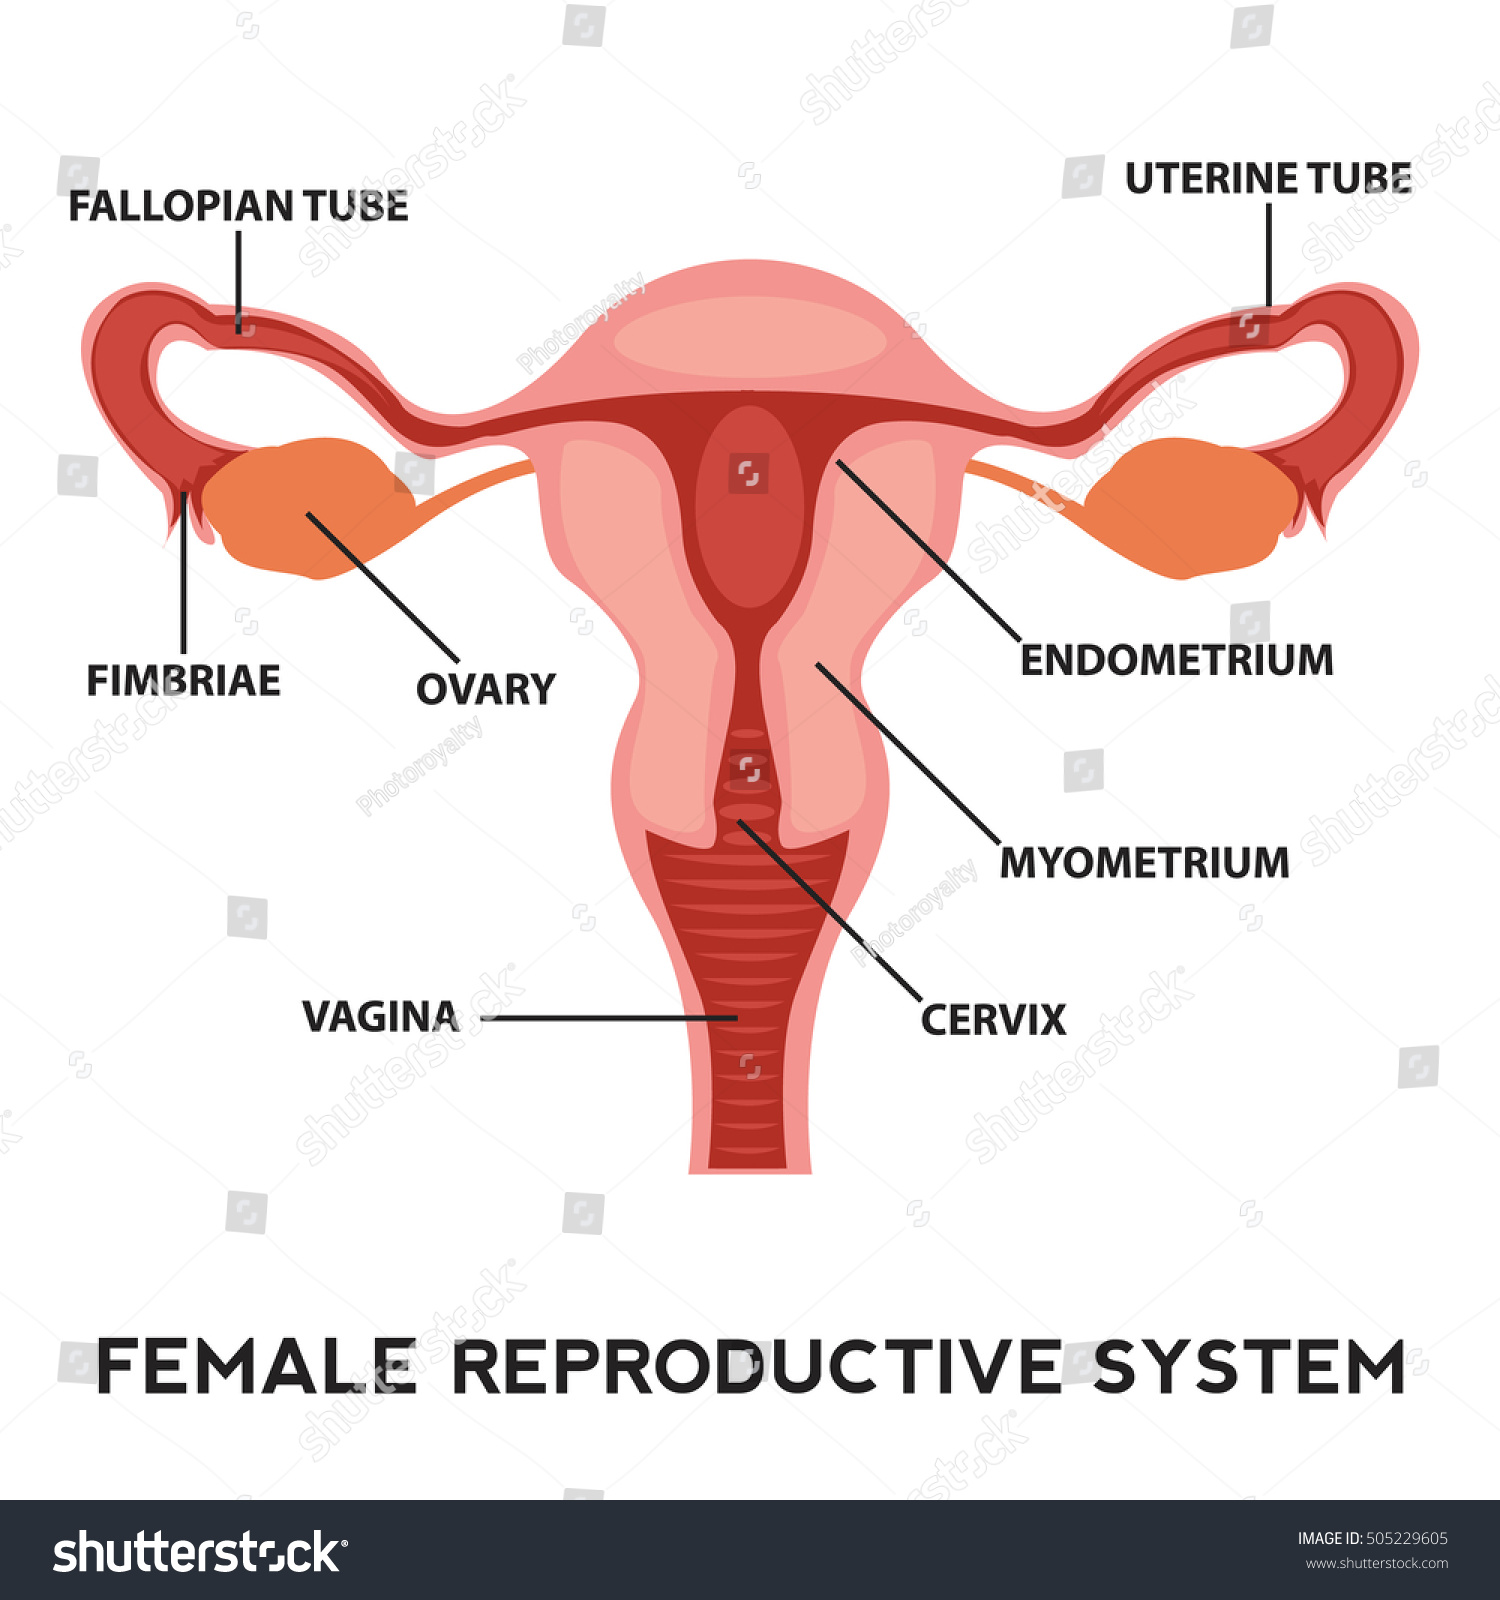 Female Reproductive System Image Diagram Vagina Medical Human Anatomy Stock Vector 5038